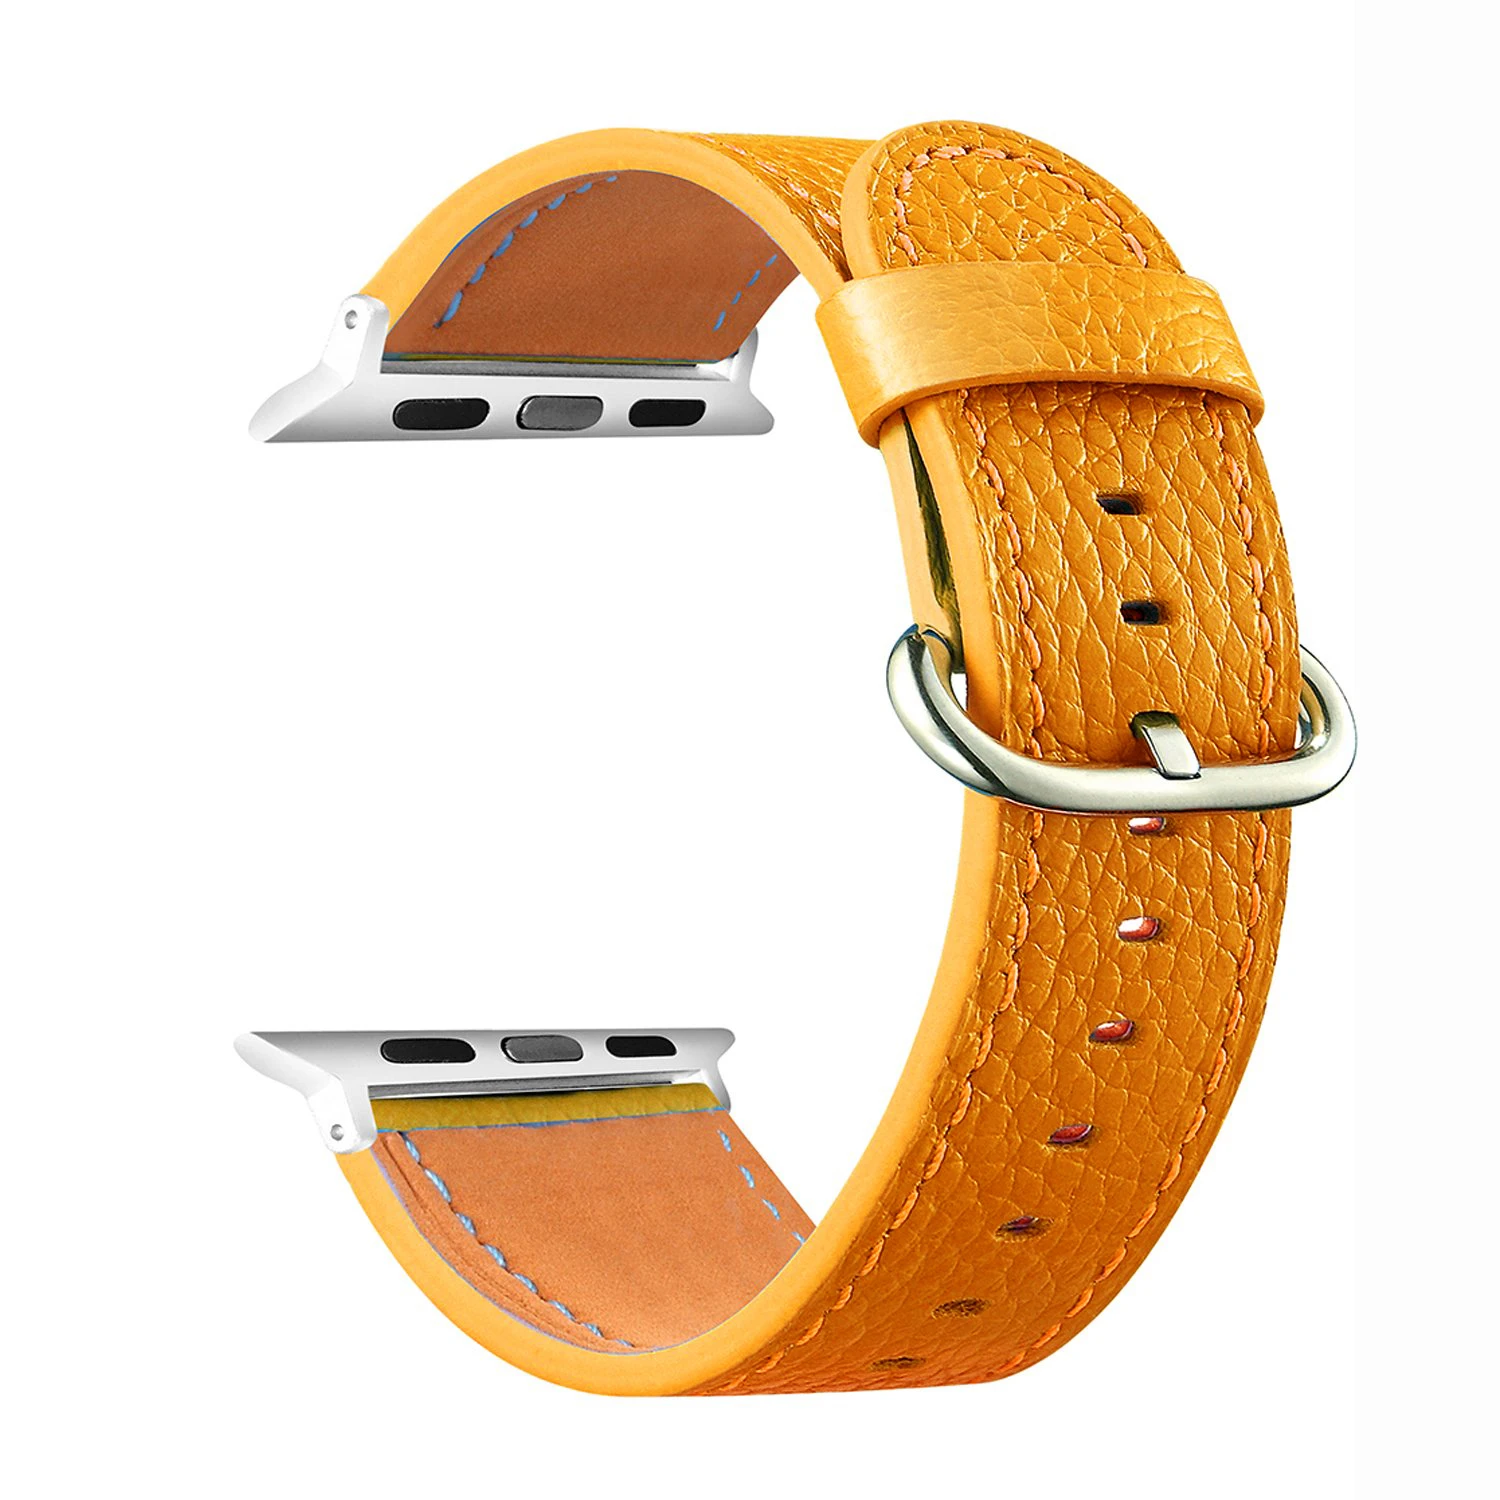 Eastar 8 Culoare Piele Watchband pentru Apple Watch Band Seria 4/3/2/1 Bratara de 42 mm 38 mm Curea Pentru iwatch 5/4 Banda 40mm 44mm